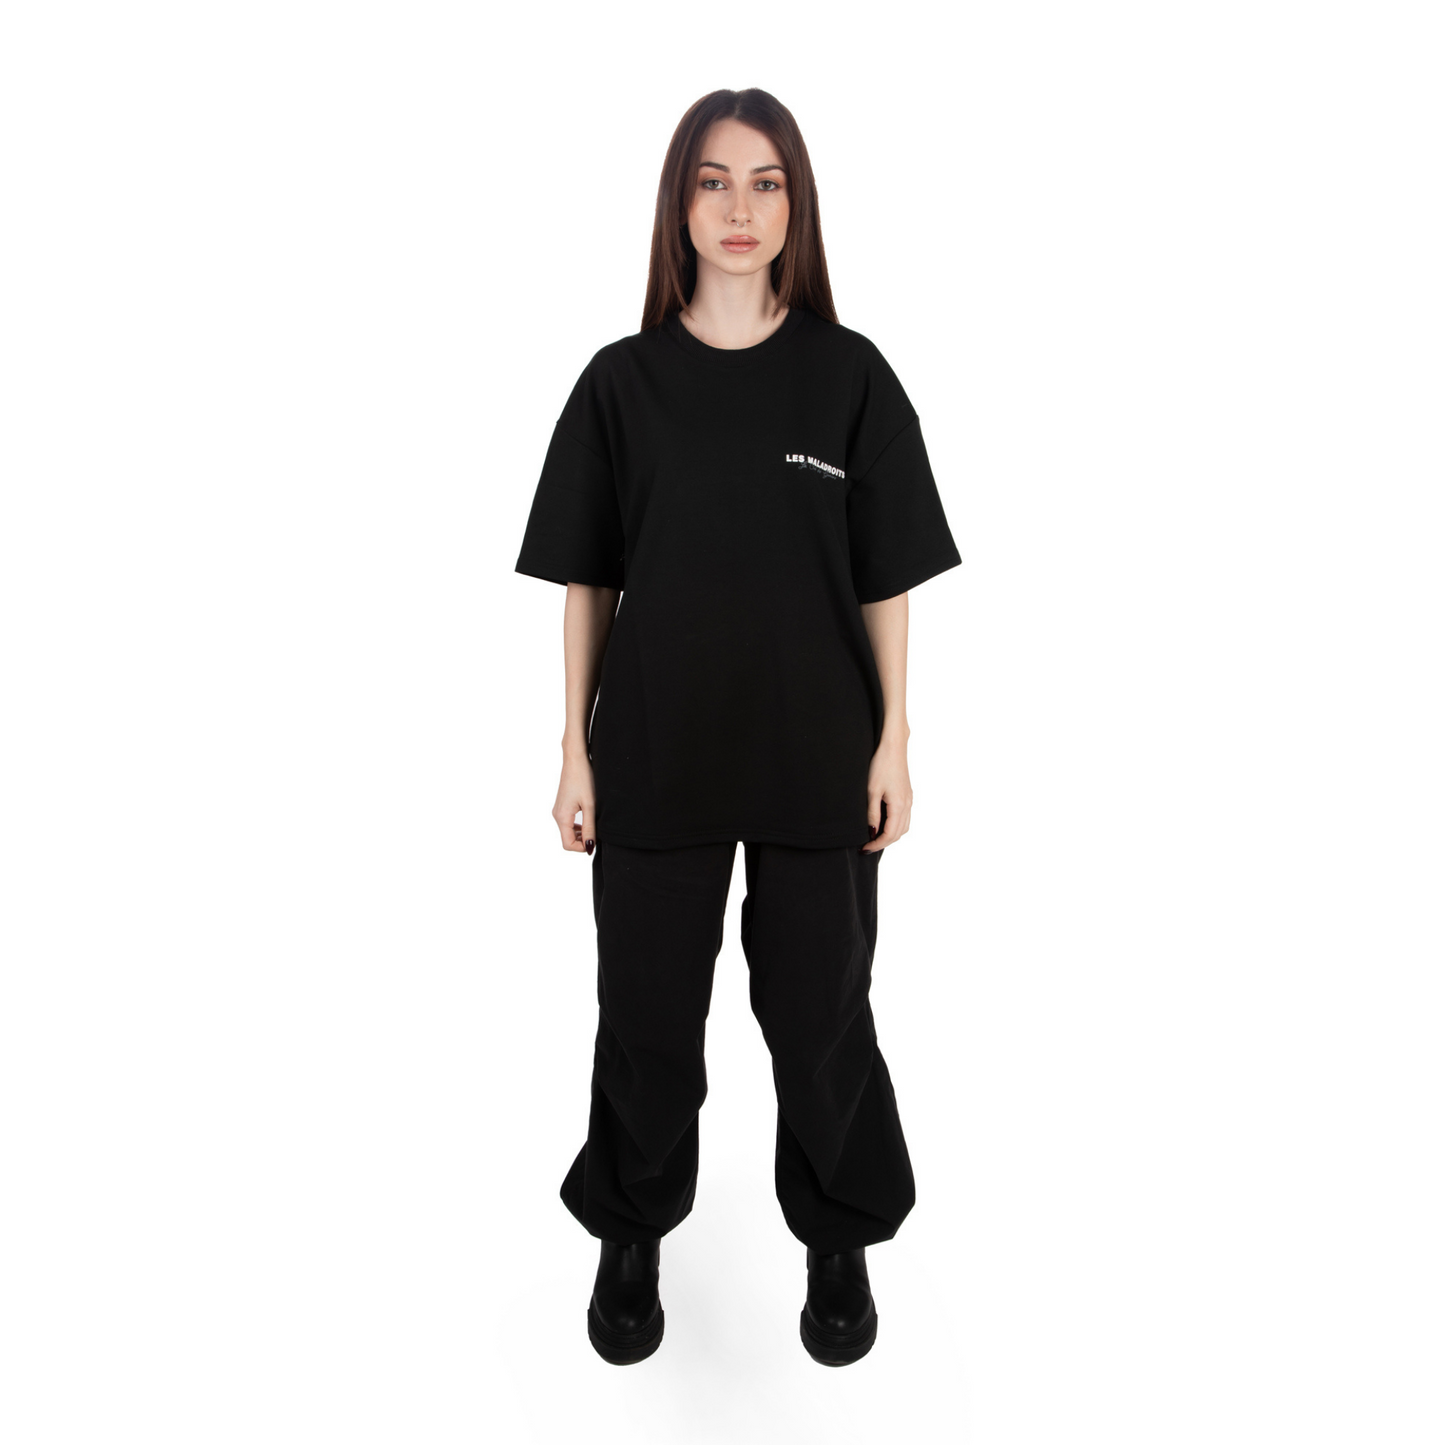 Unisex Oversized Black T-shirt Le Club des Gamins front view on female model